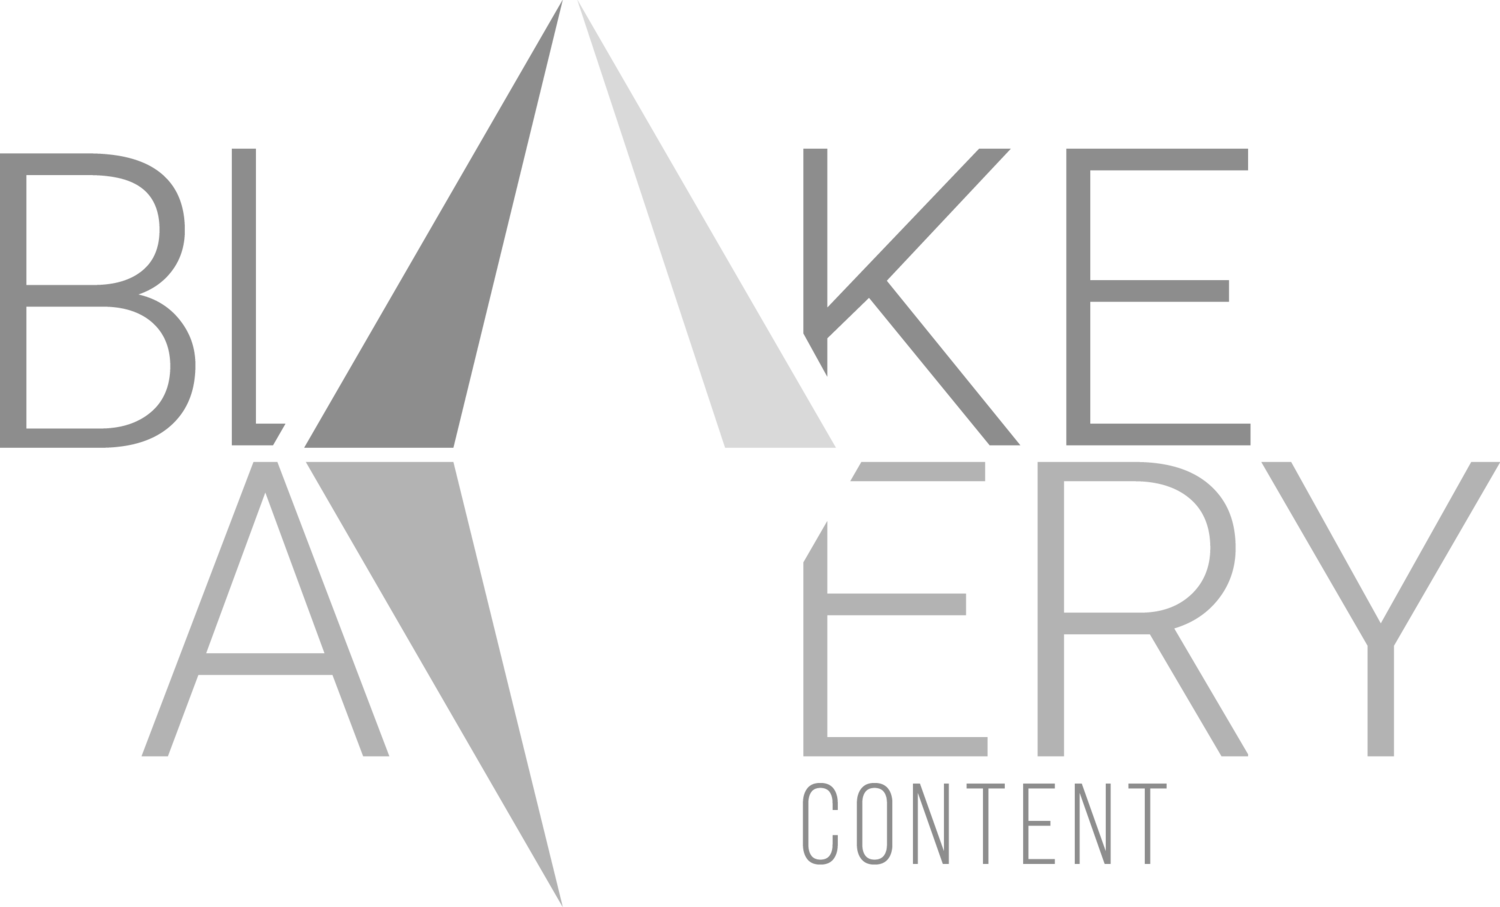 Blake Avery Content